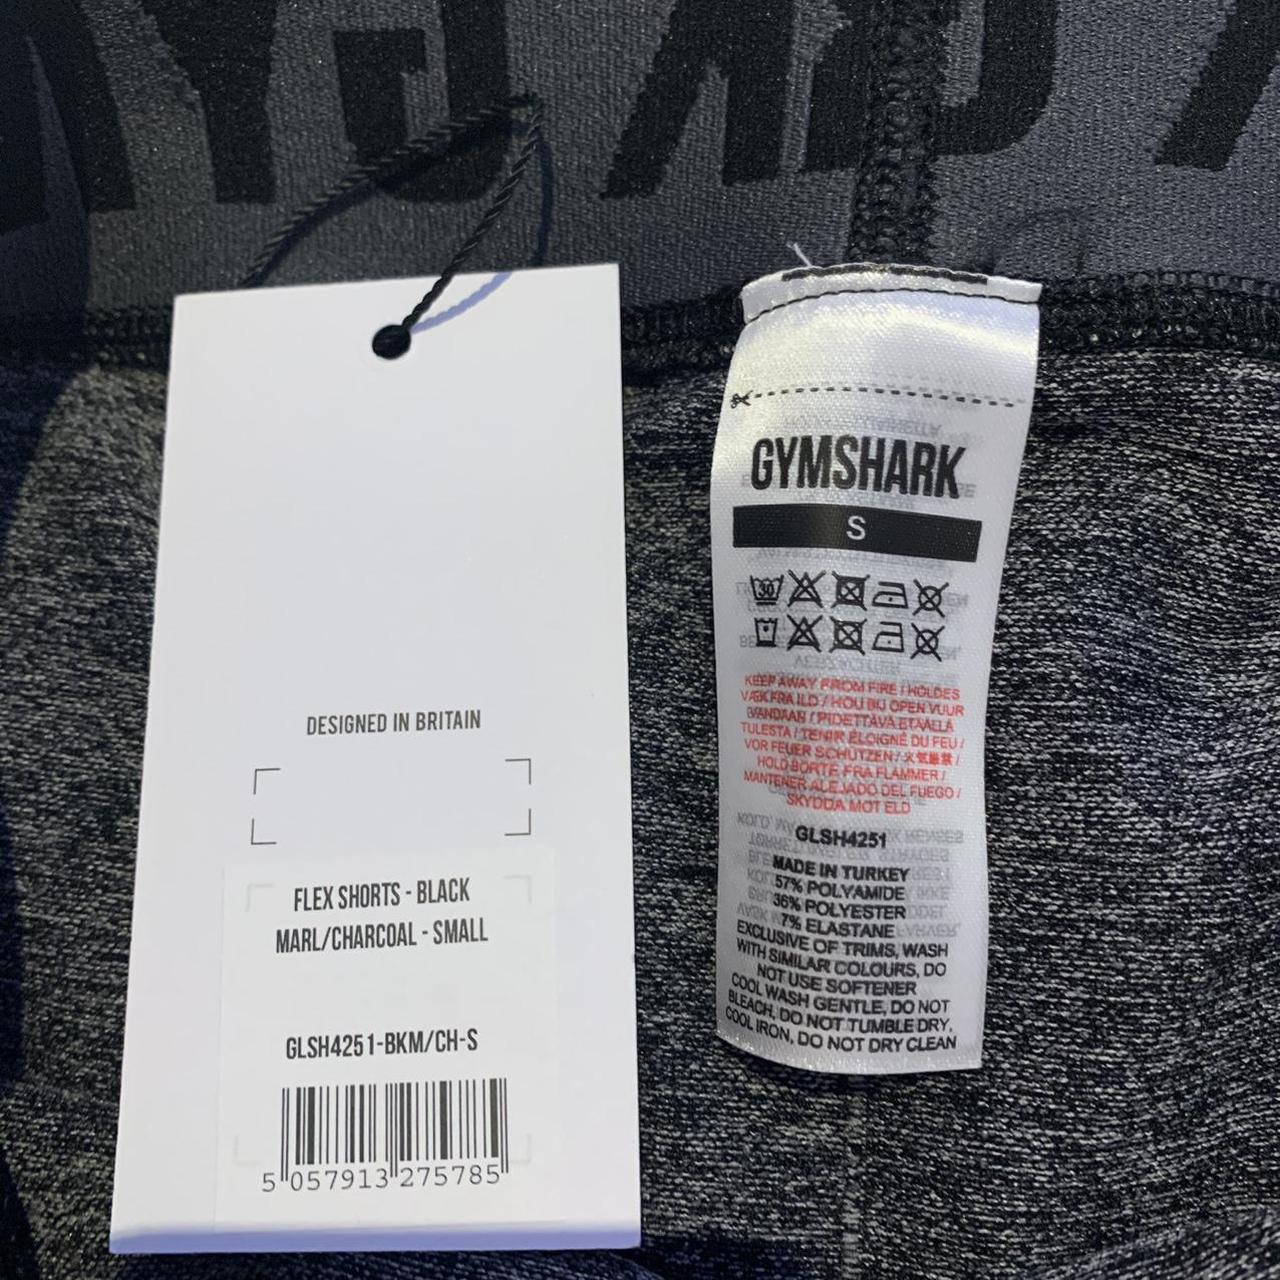 GYMSHARK flex shorts in charcoal and black colour - Depop